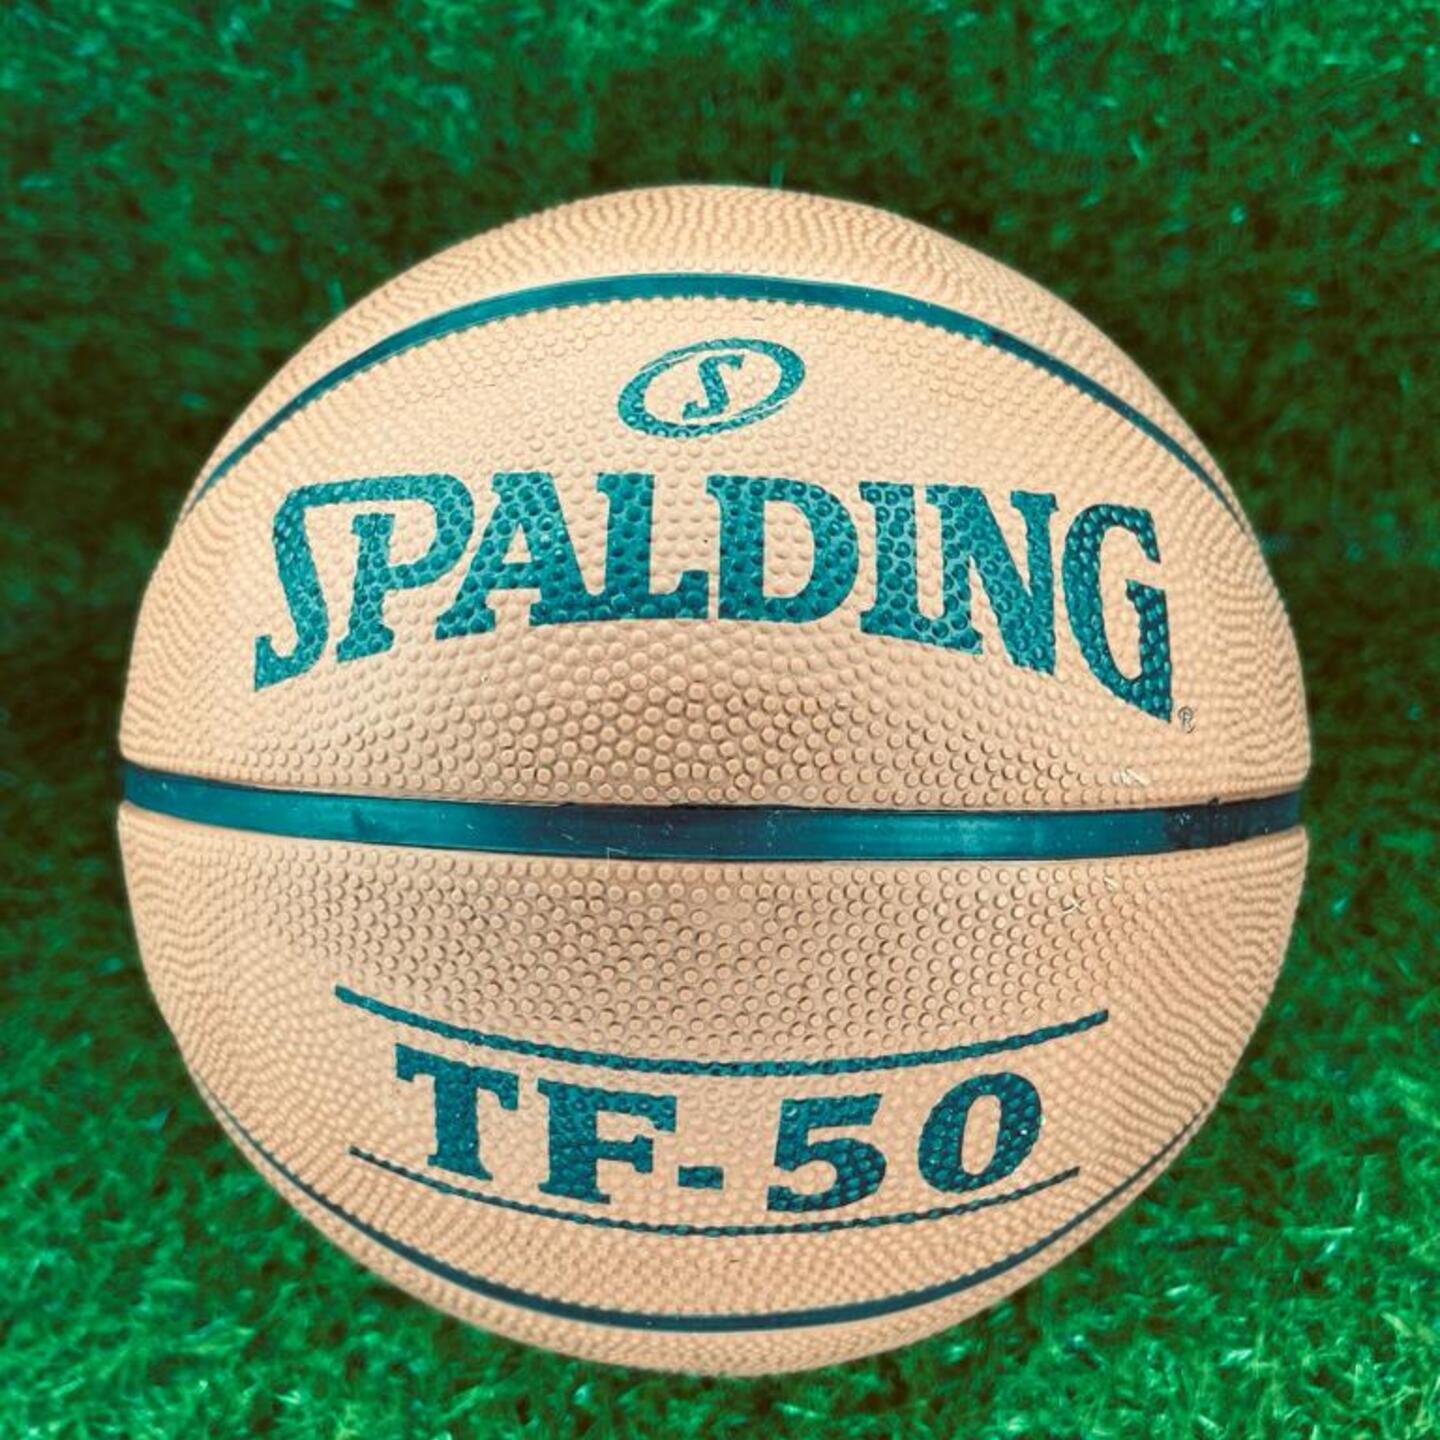 SPALDING NBA TF-50 BASKETBALL SIZE 6